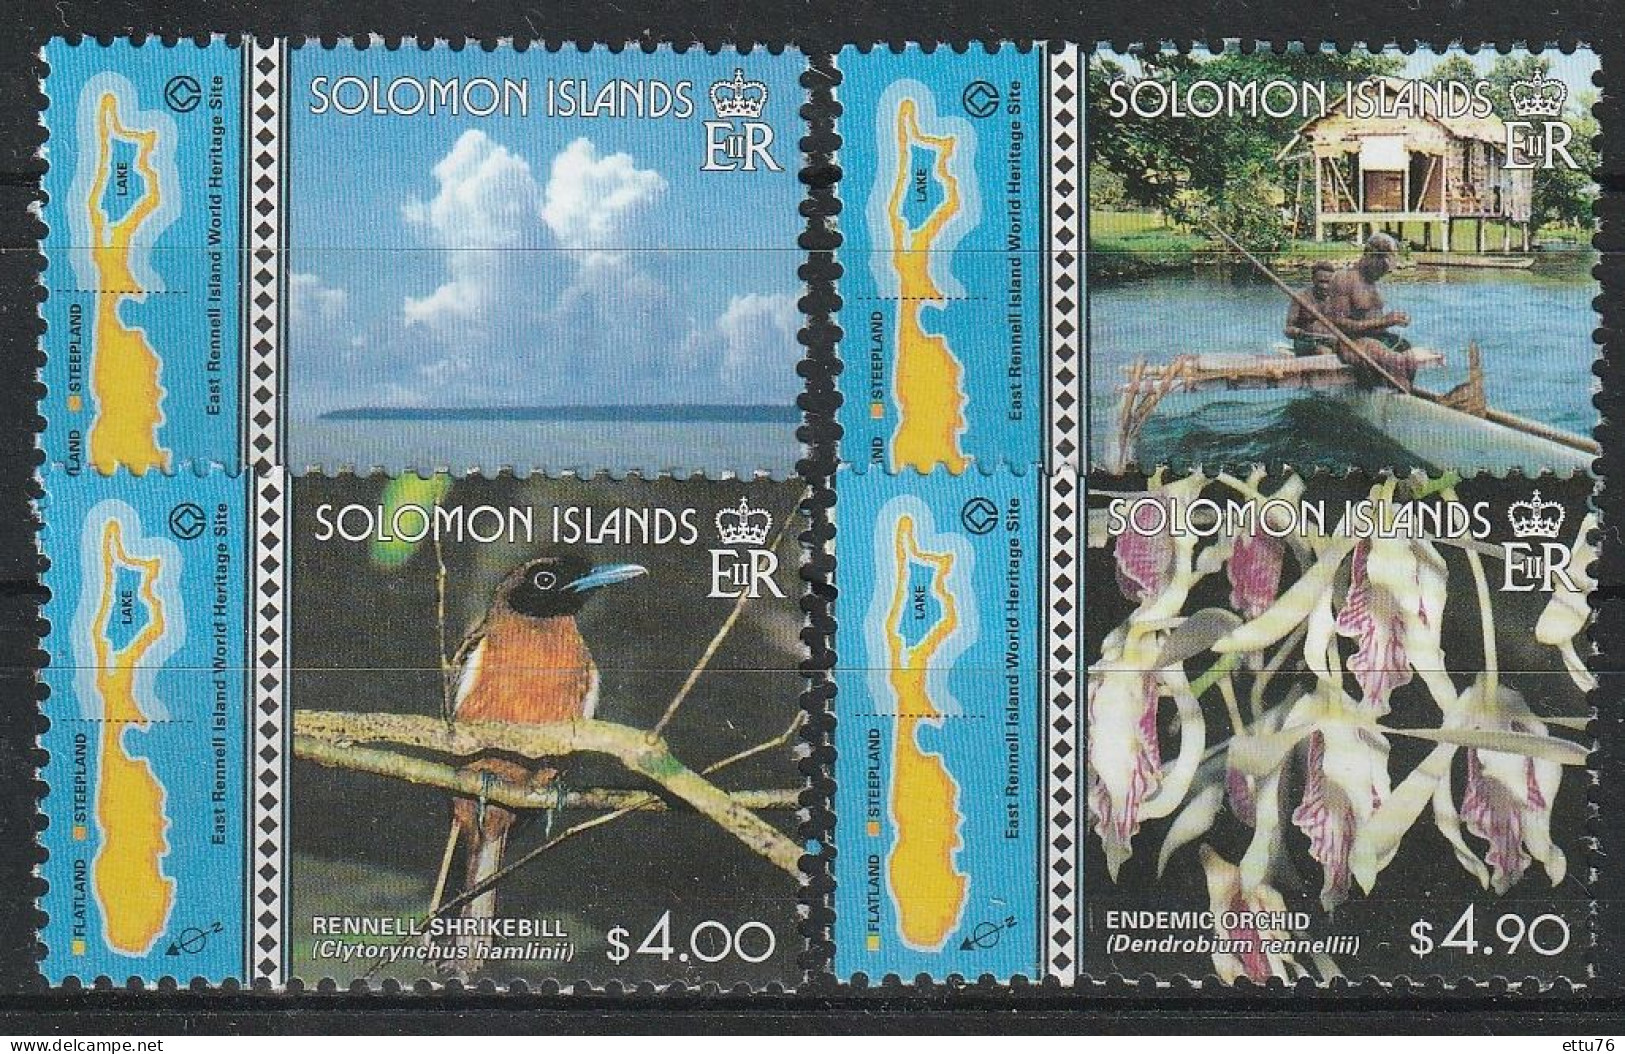 Solomon Islands 2000  East Rennel,World Heritage Site,Birds,Orchids  Set  MNH - Solomoneilanden (1978-...)